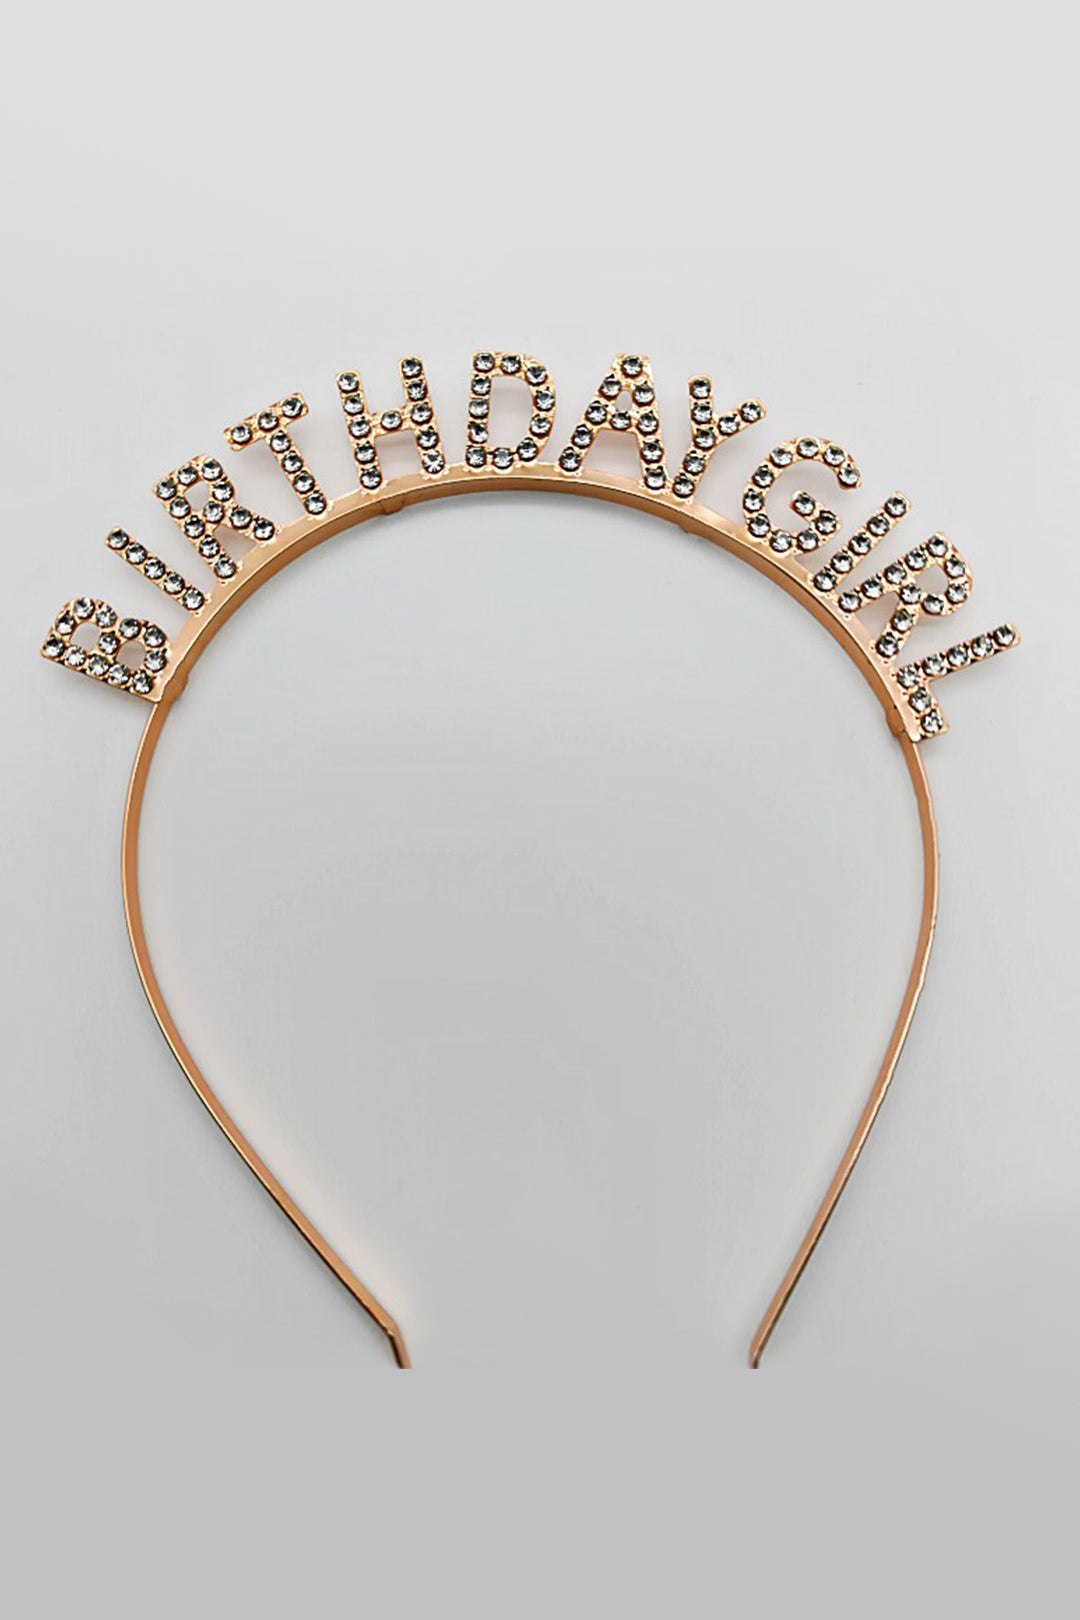 Rhinestone 'Birthday Girl' Tiara Headband